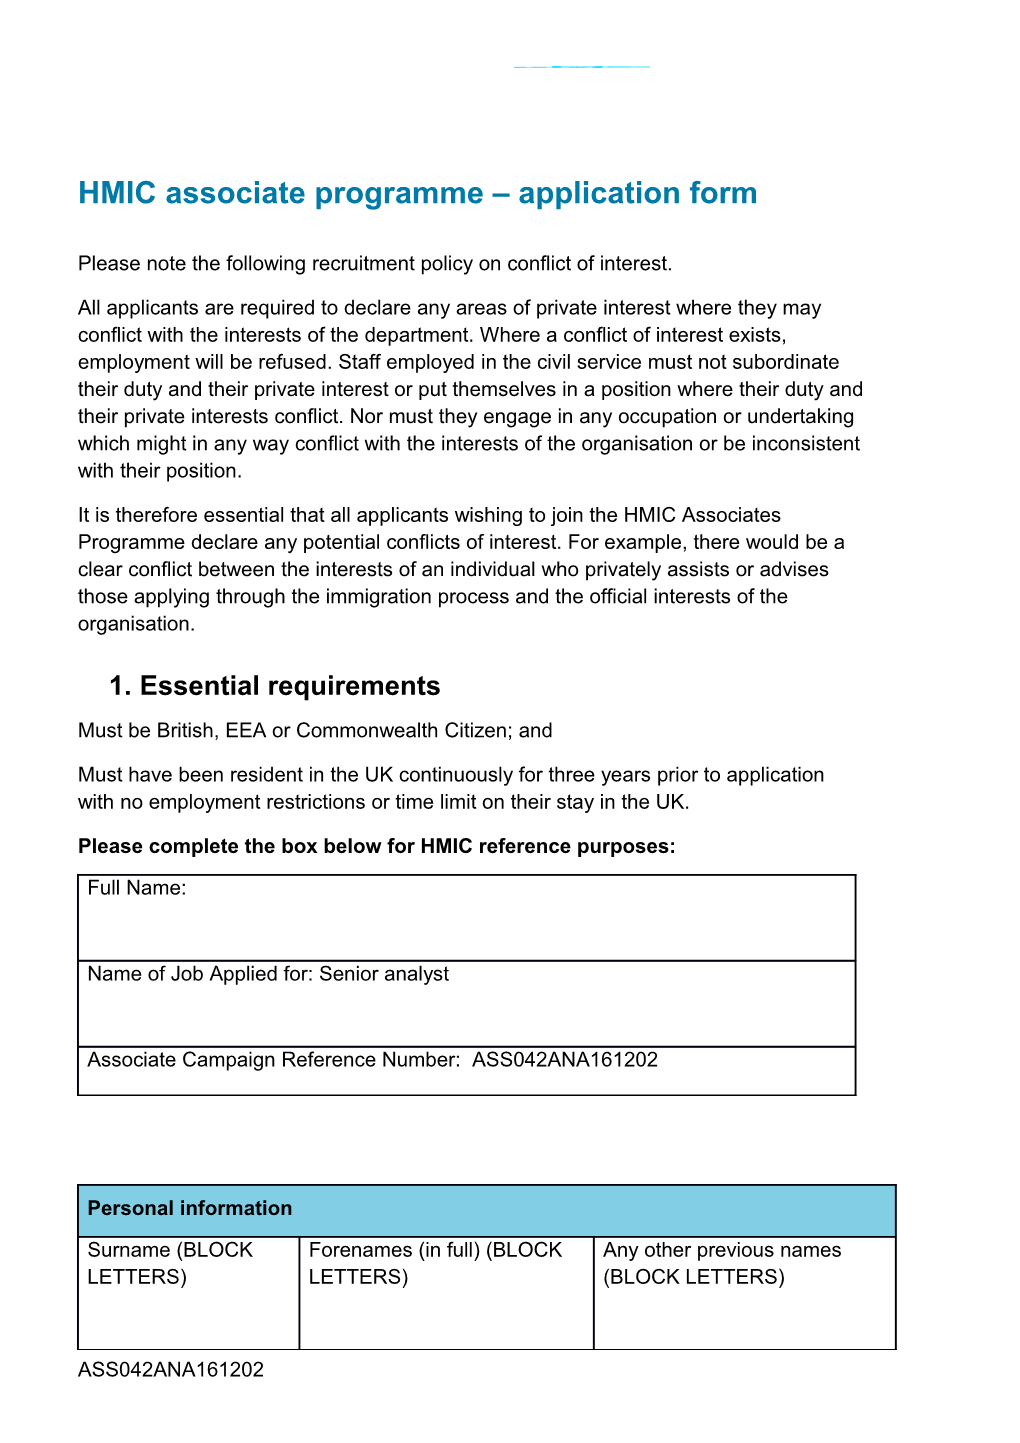 HMIC Associate Programme Application Form